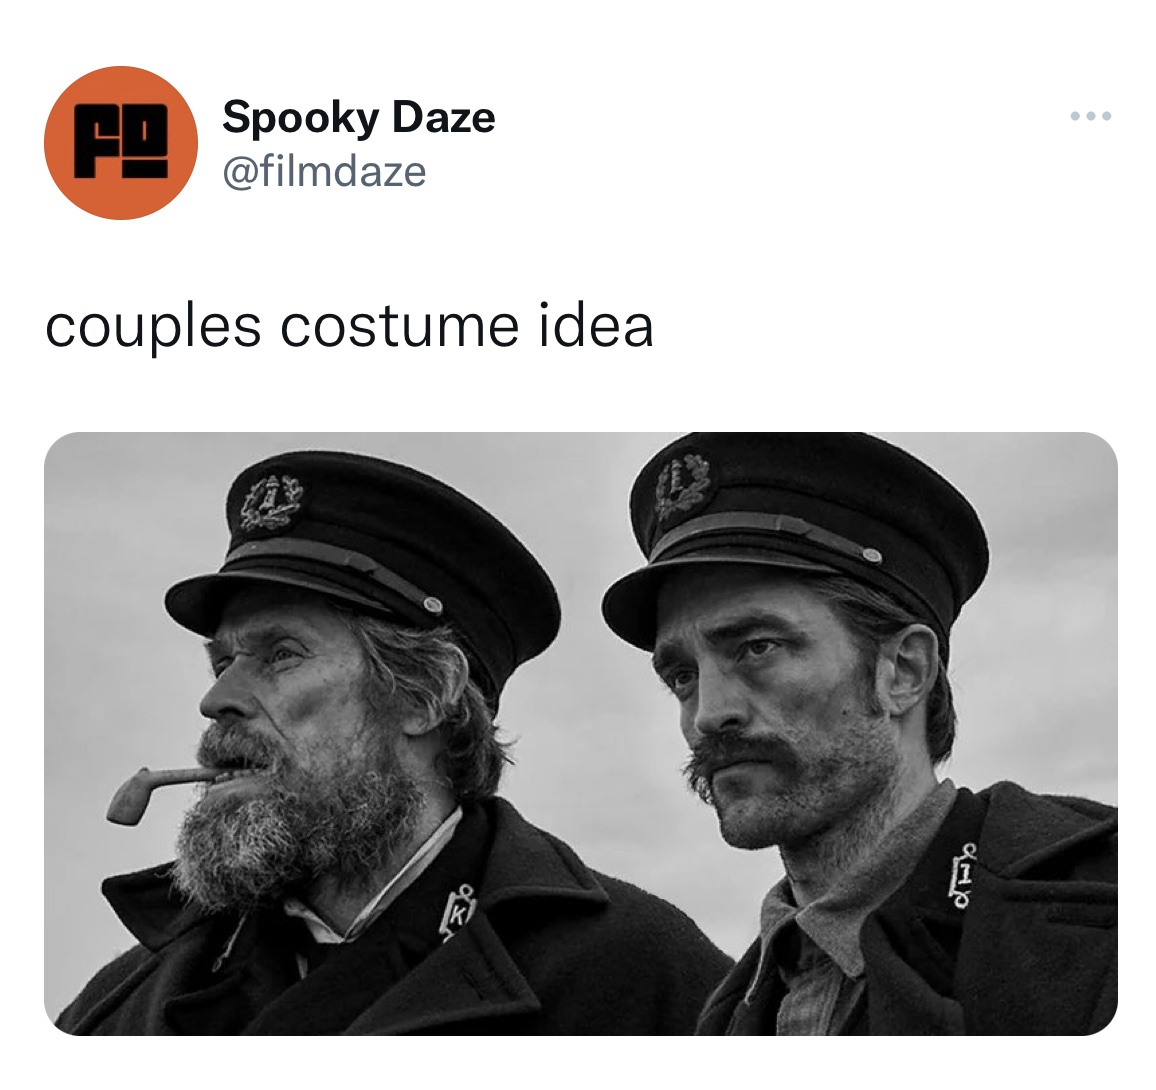 Tweets roasting celebs - lighthouse movie - Pd Spooky Daze couples costume idea Le